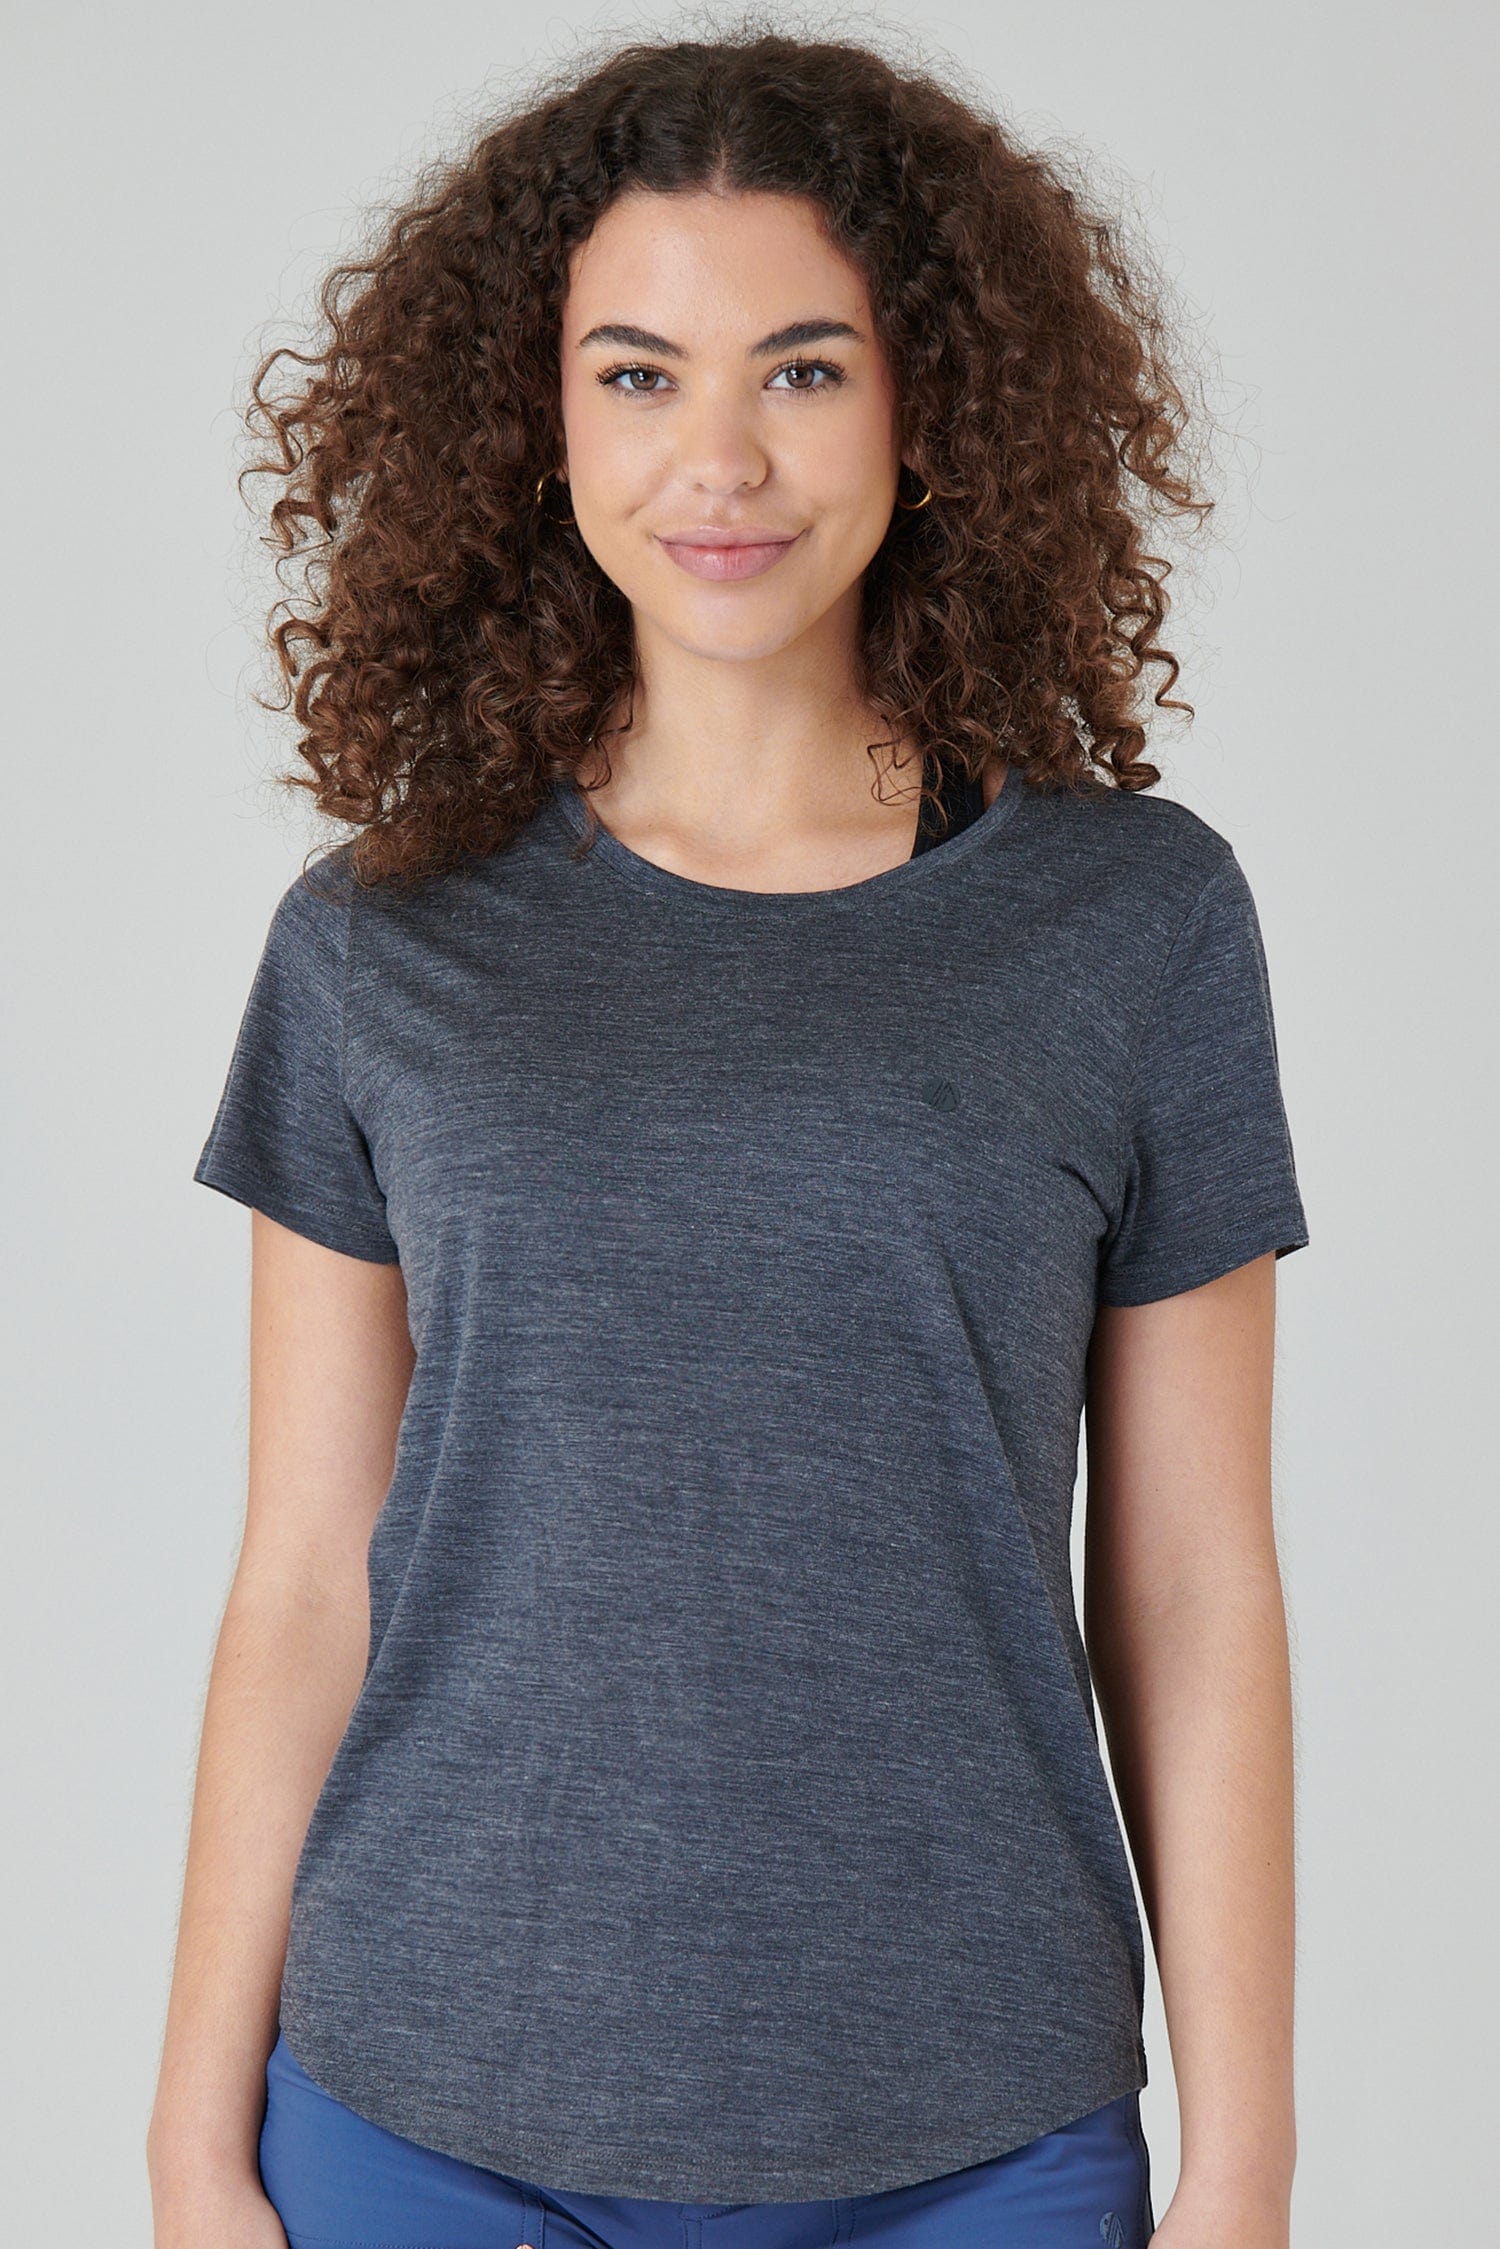 Merino Wool Crew Neck T-shirt - Charcoal - Xlarge / Uk16 - Womens - Acai Outdoorwear